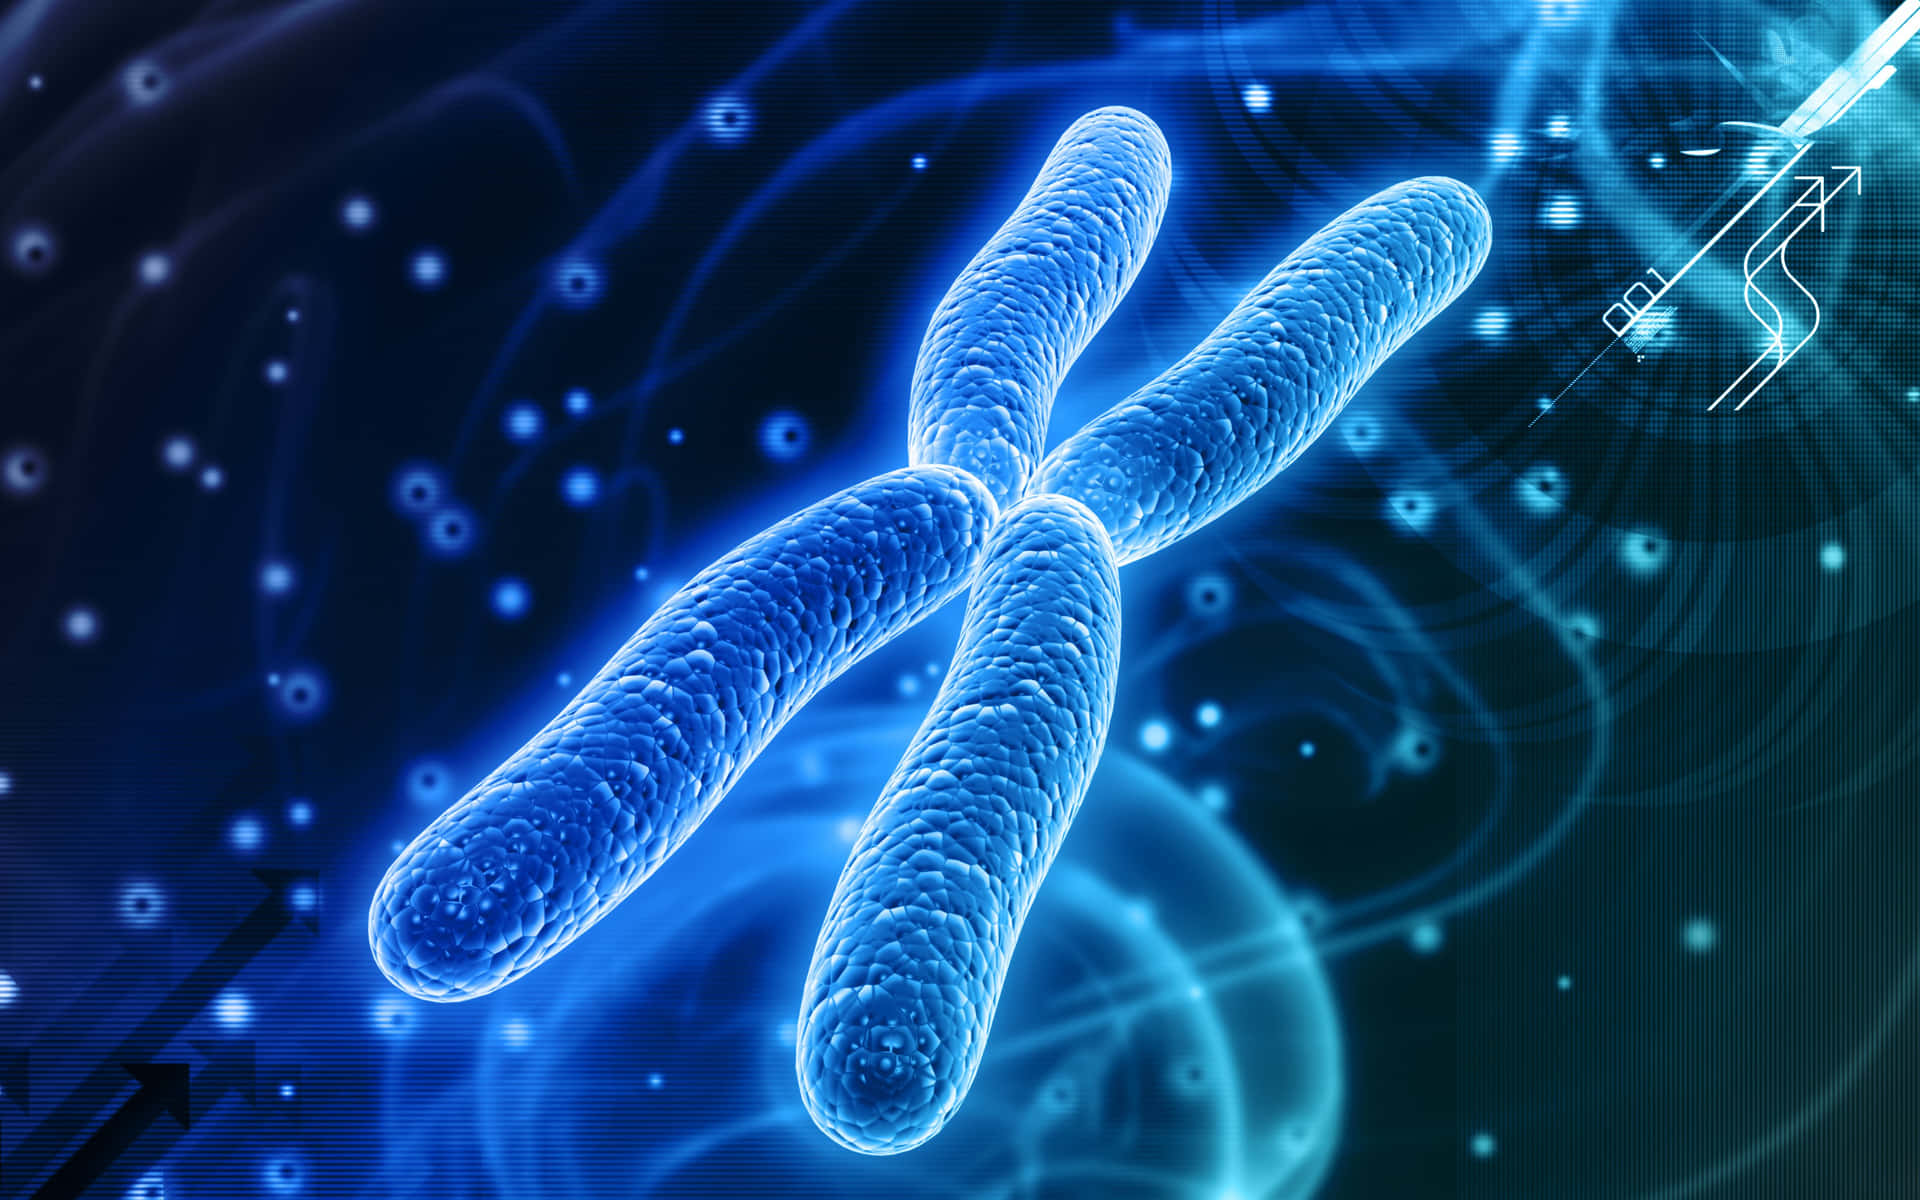 A Blue Chromosome With A Blue Background